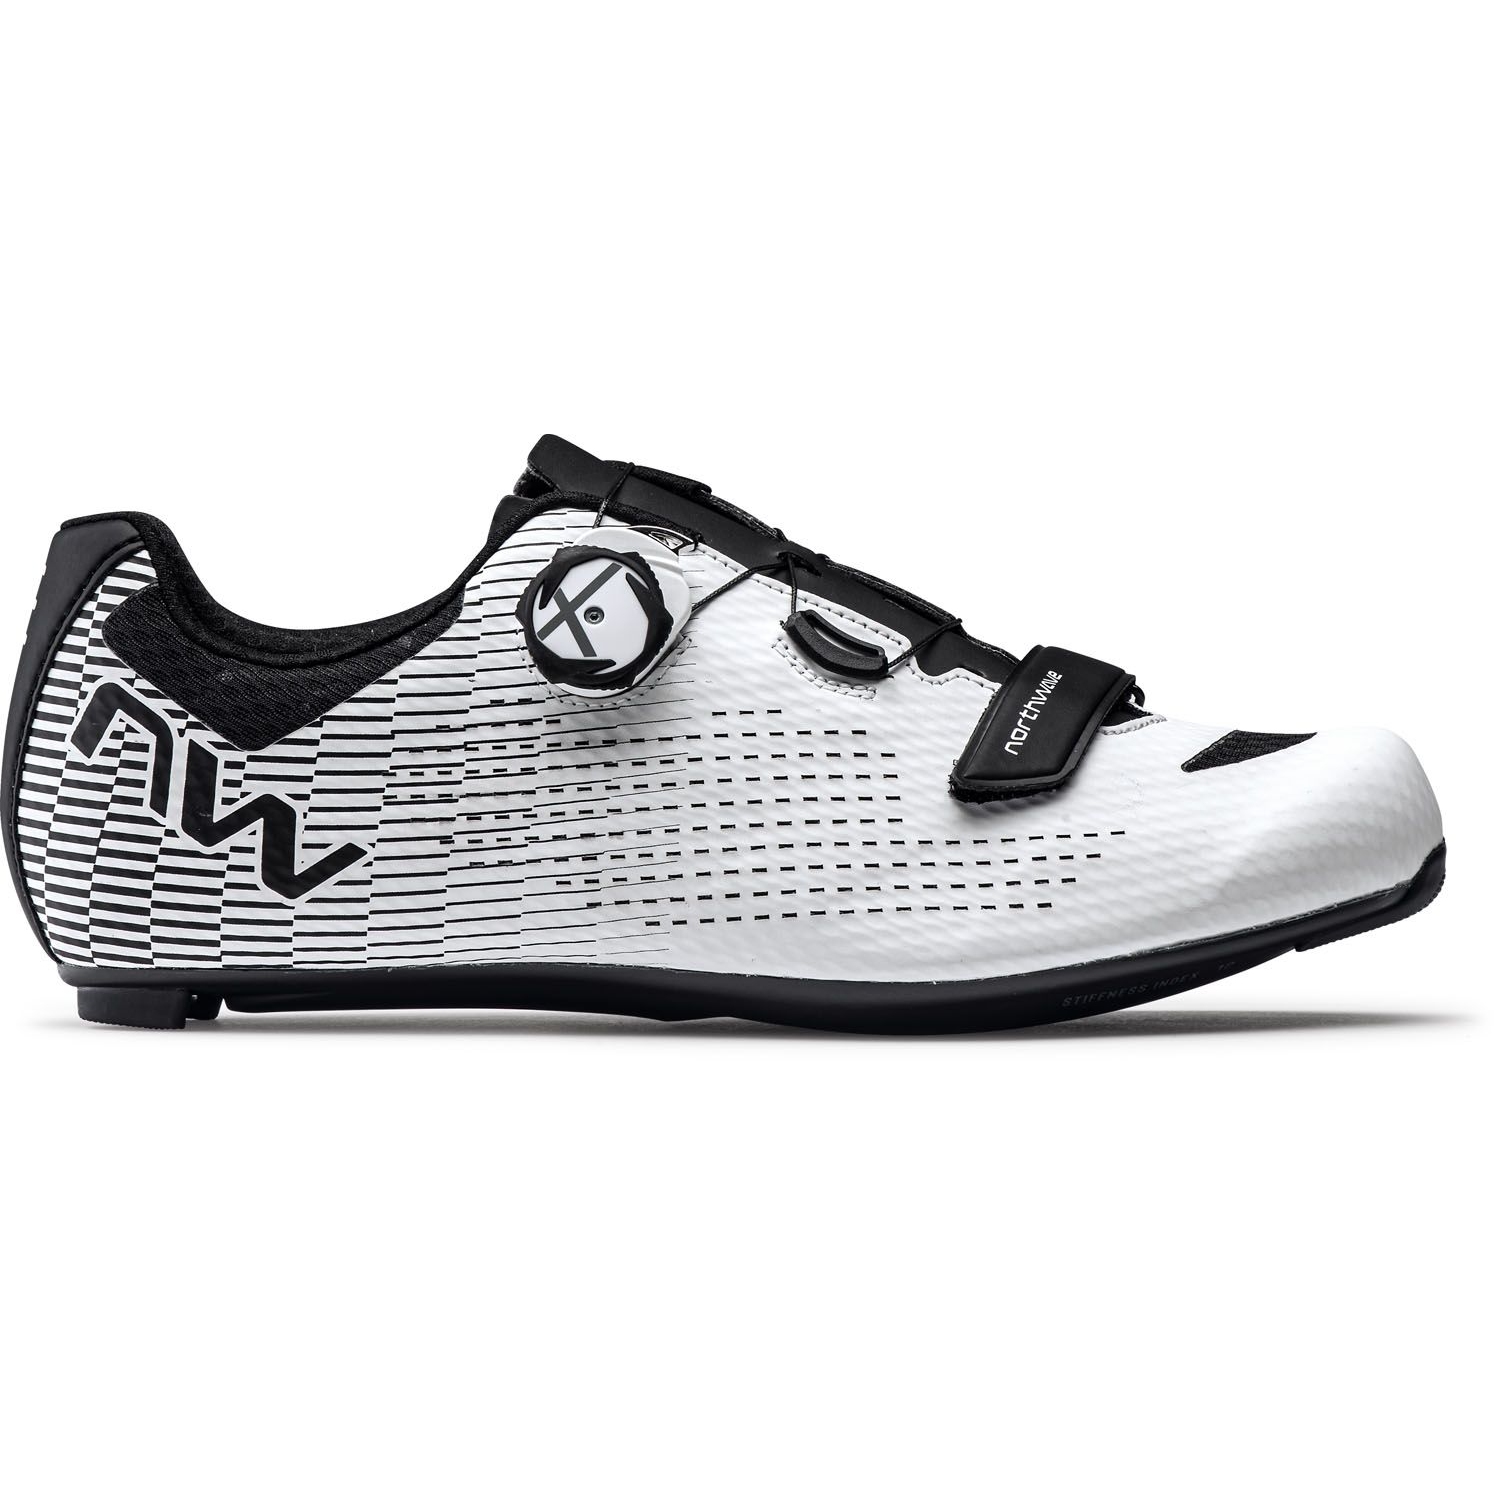 Image of Northwave Storm Carbon 2 Road Shoes Men - white/black 51